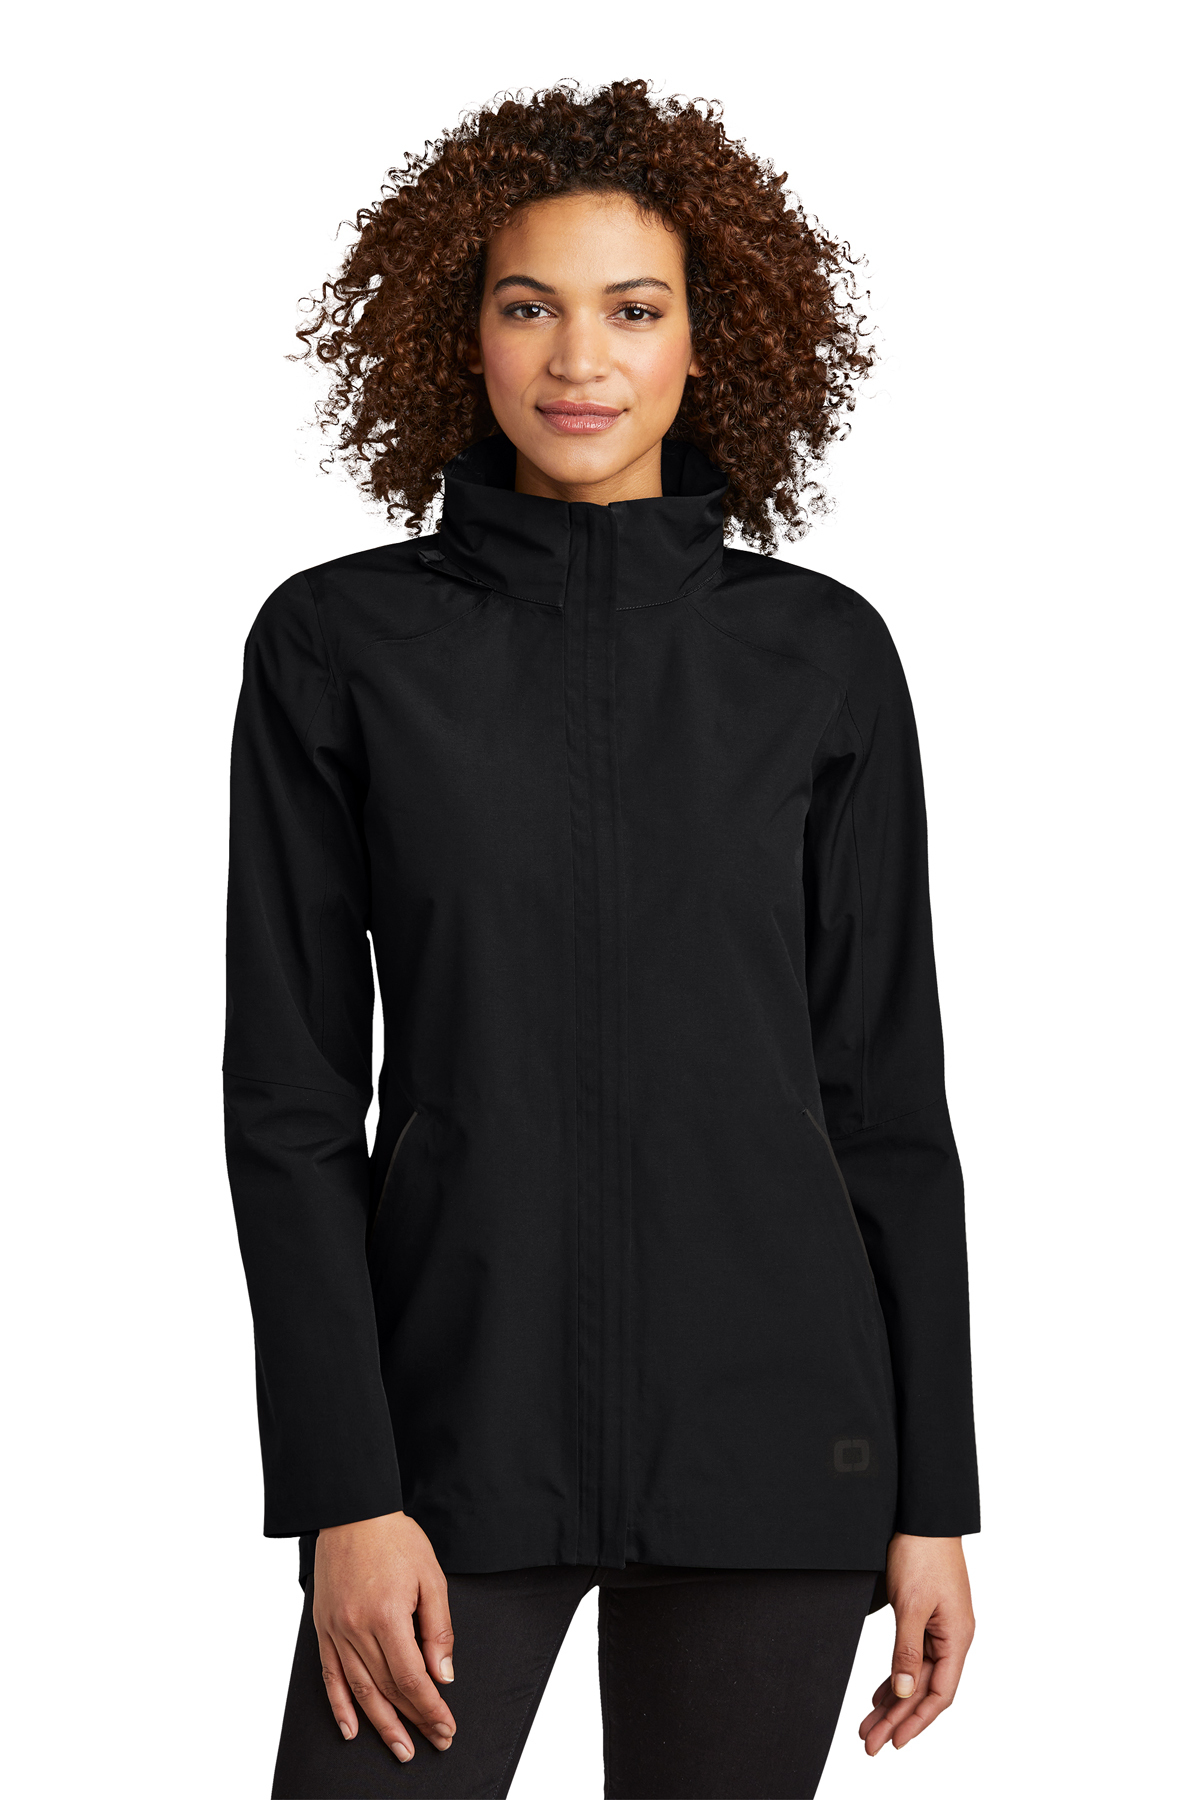 OGIO Ladies Utilitarian Jacket | Product | SanMar